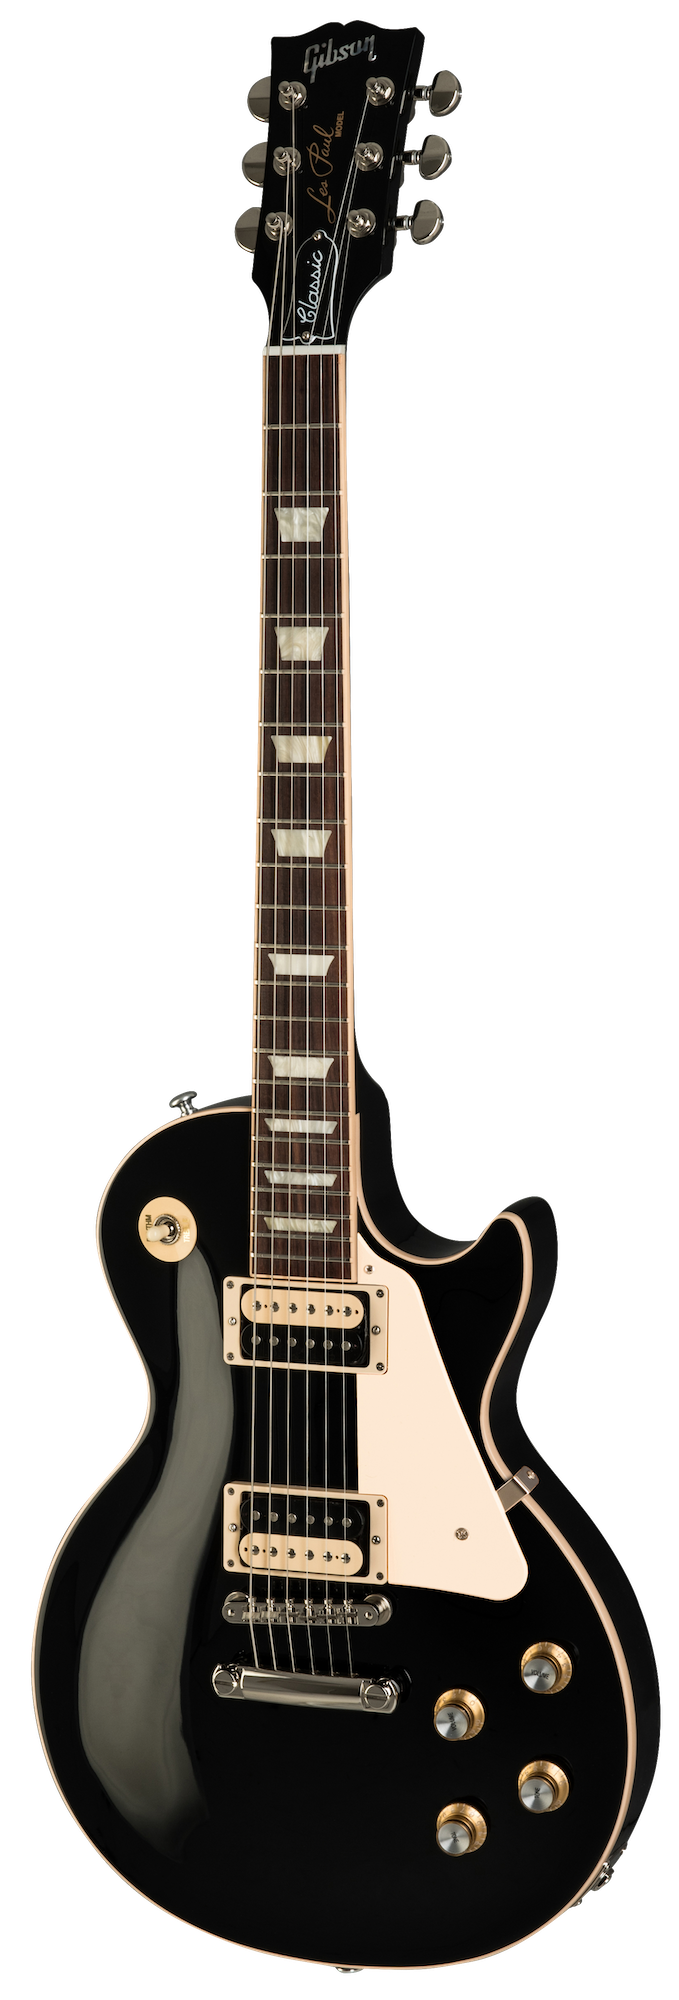 Billede af Gibson Les Paul Classic Ebony